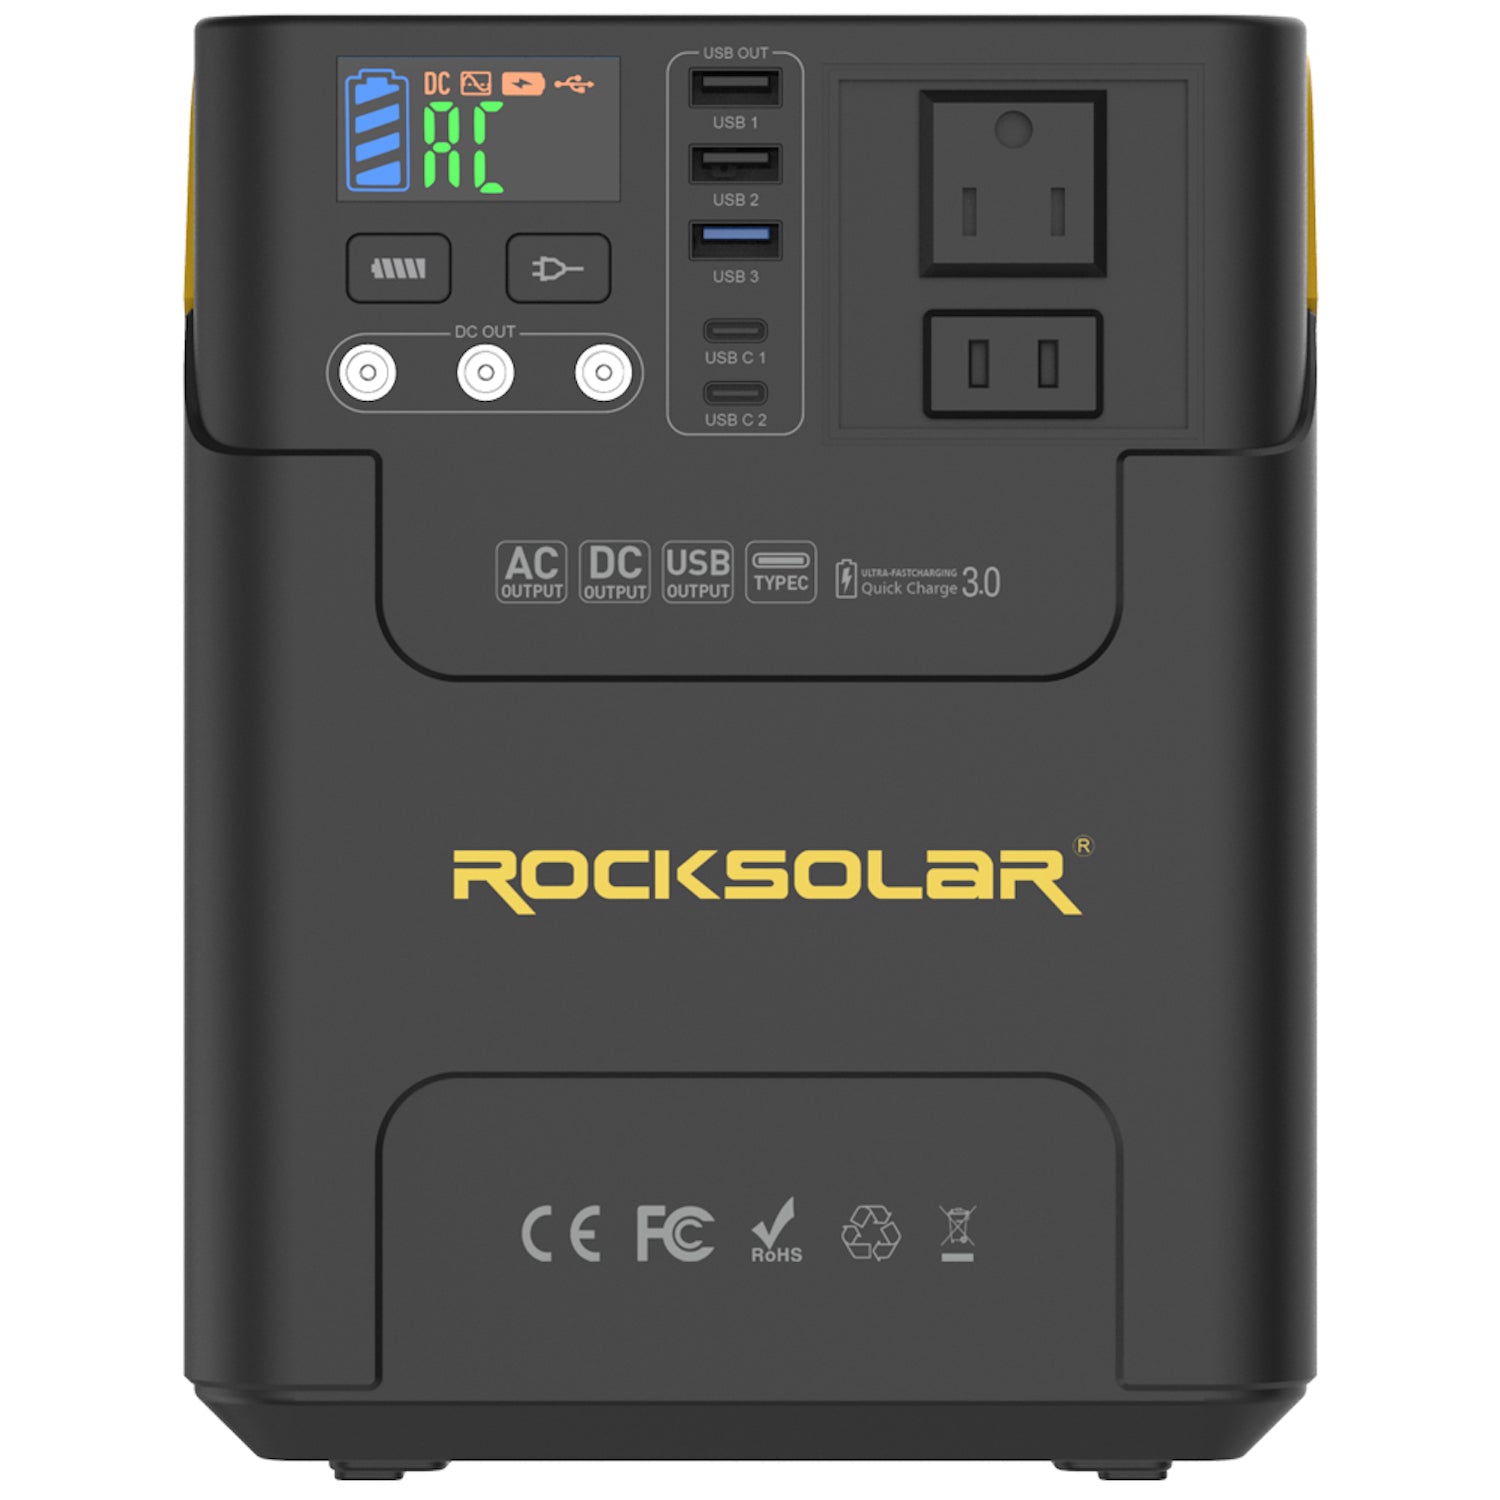 ROCKSOLAR Adventurer 100W Portable Power Station - Lithium Battery and Solar Generator